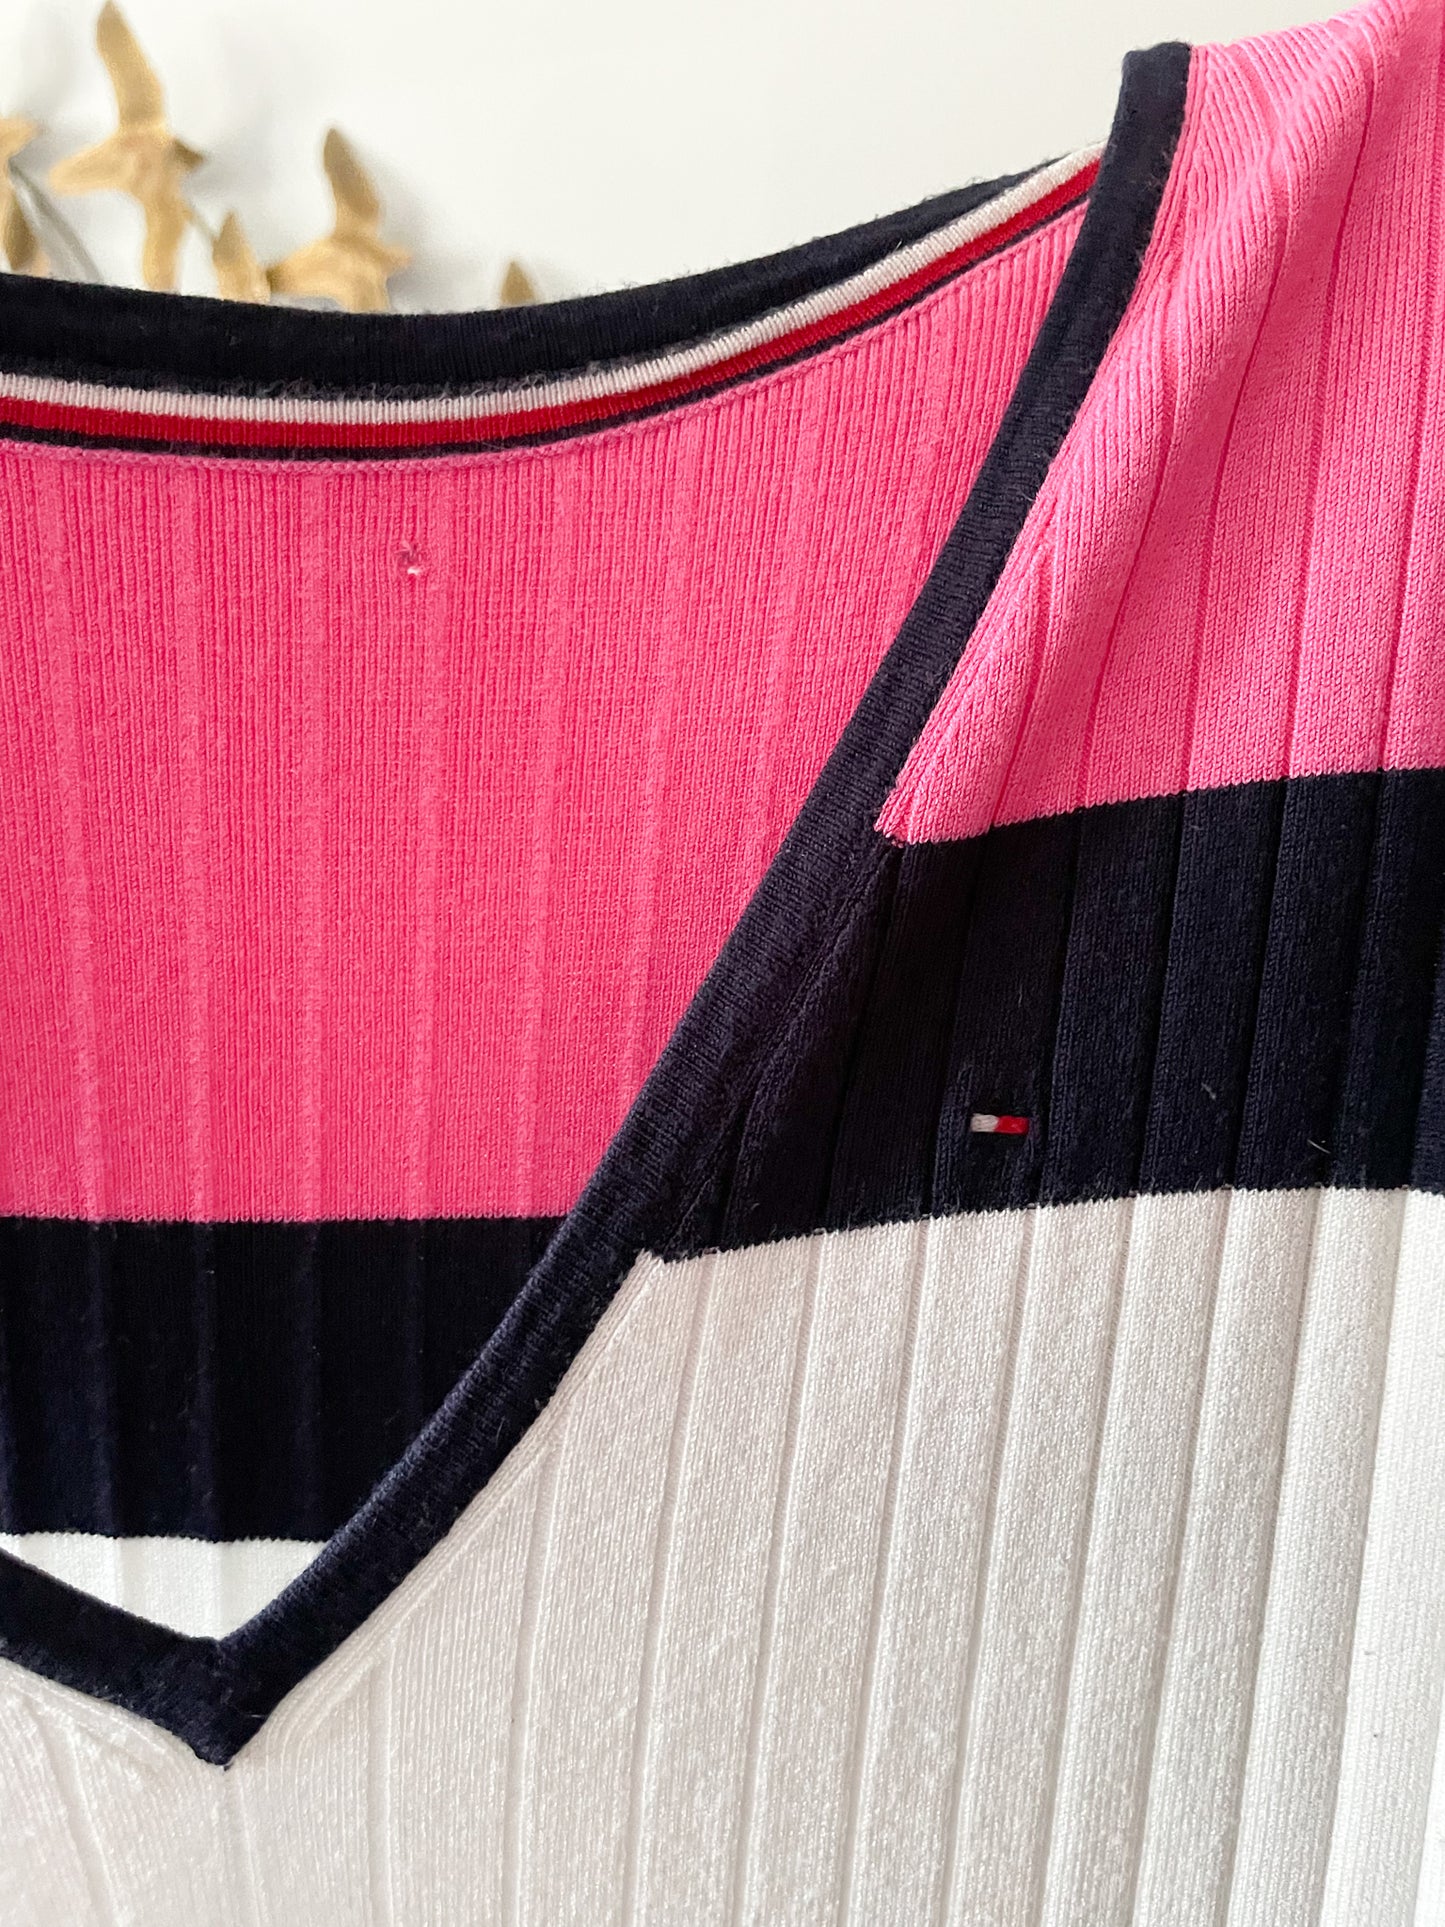 Tommy Hilfiger Knit Sleeveless Dress Consulting Ribbed V-Neck Navy & Prix Fashion – Le Pink - Stripe